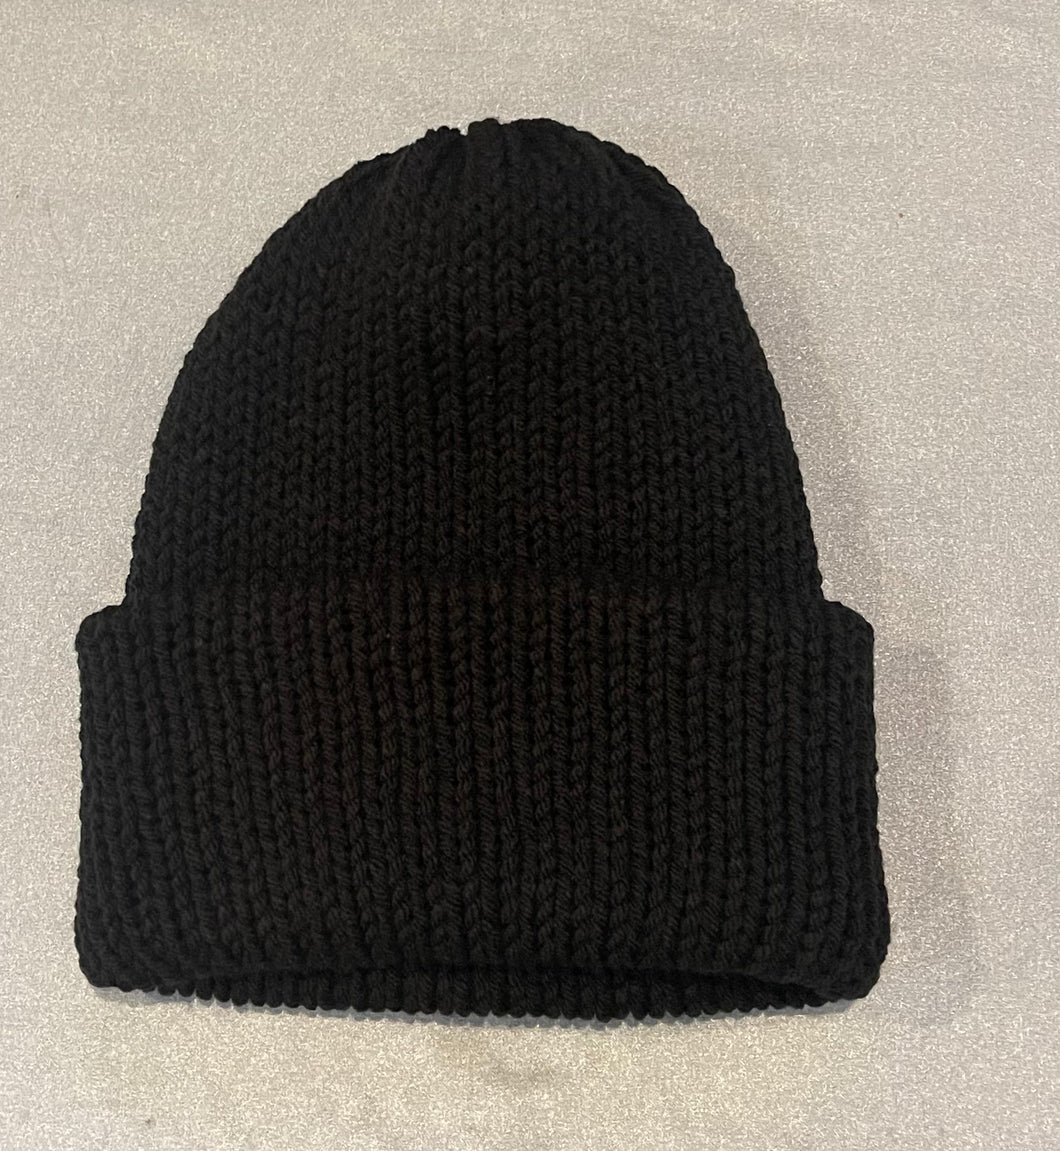 Knit black hat